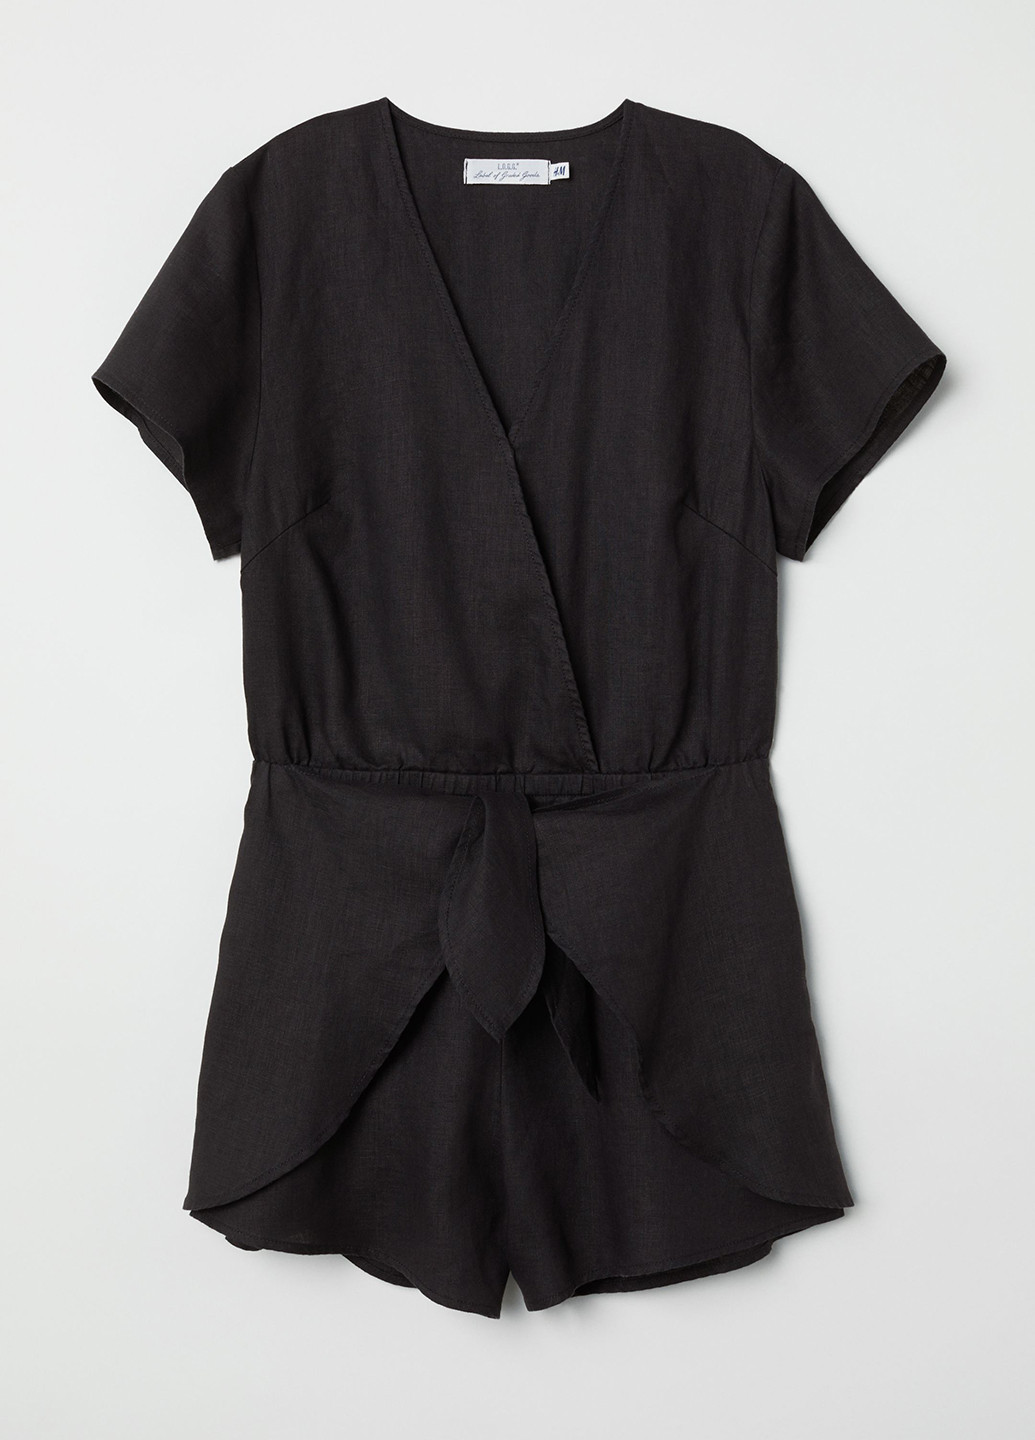 Комбинезон H&M комбинезон-шорты однотонный чёрный кэжуал лен